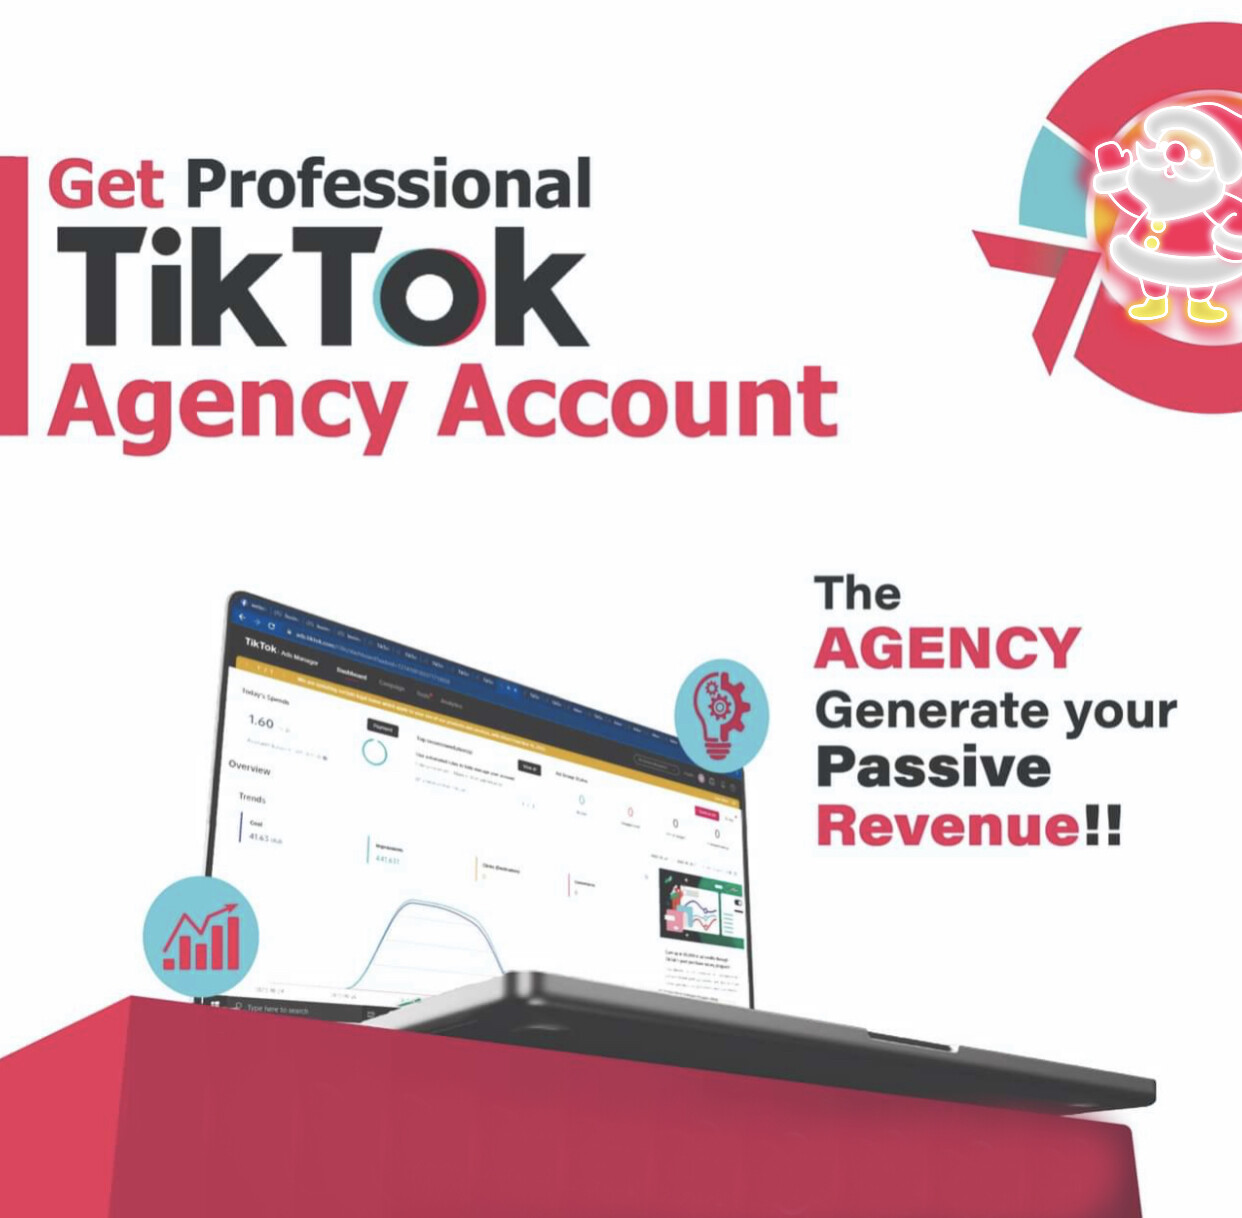 Verified tiktok accounts for sale - Buy & Sell TikTok Accounts - SWAPD